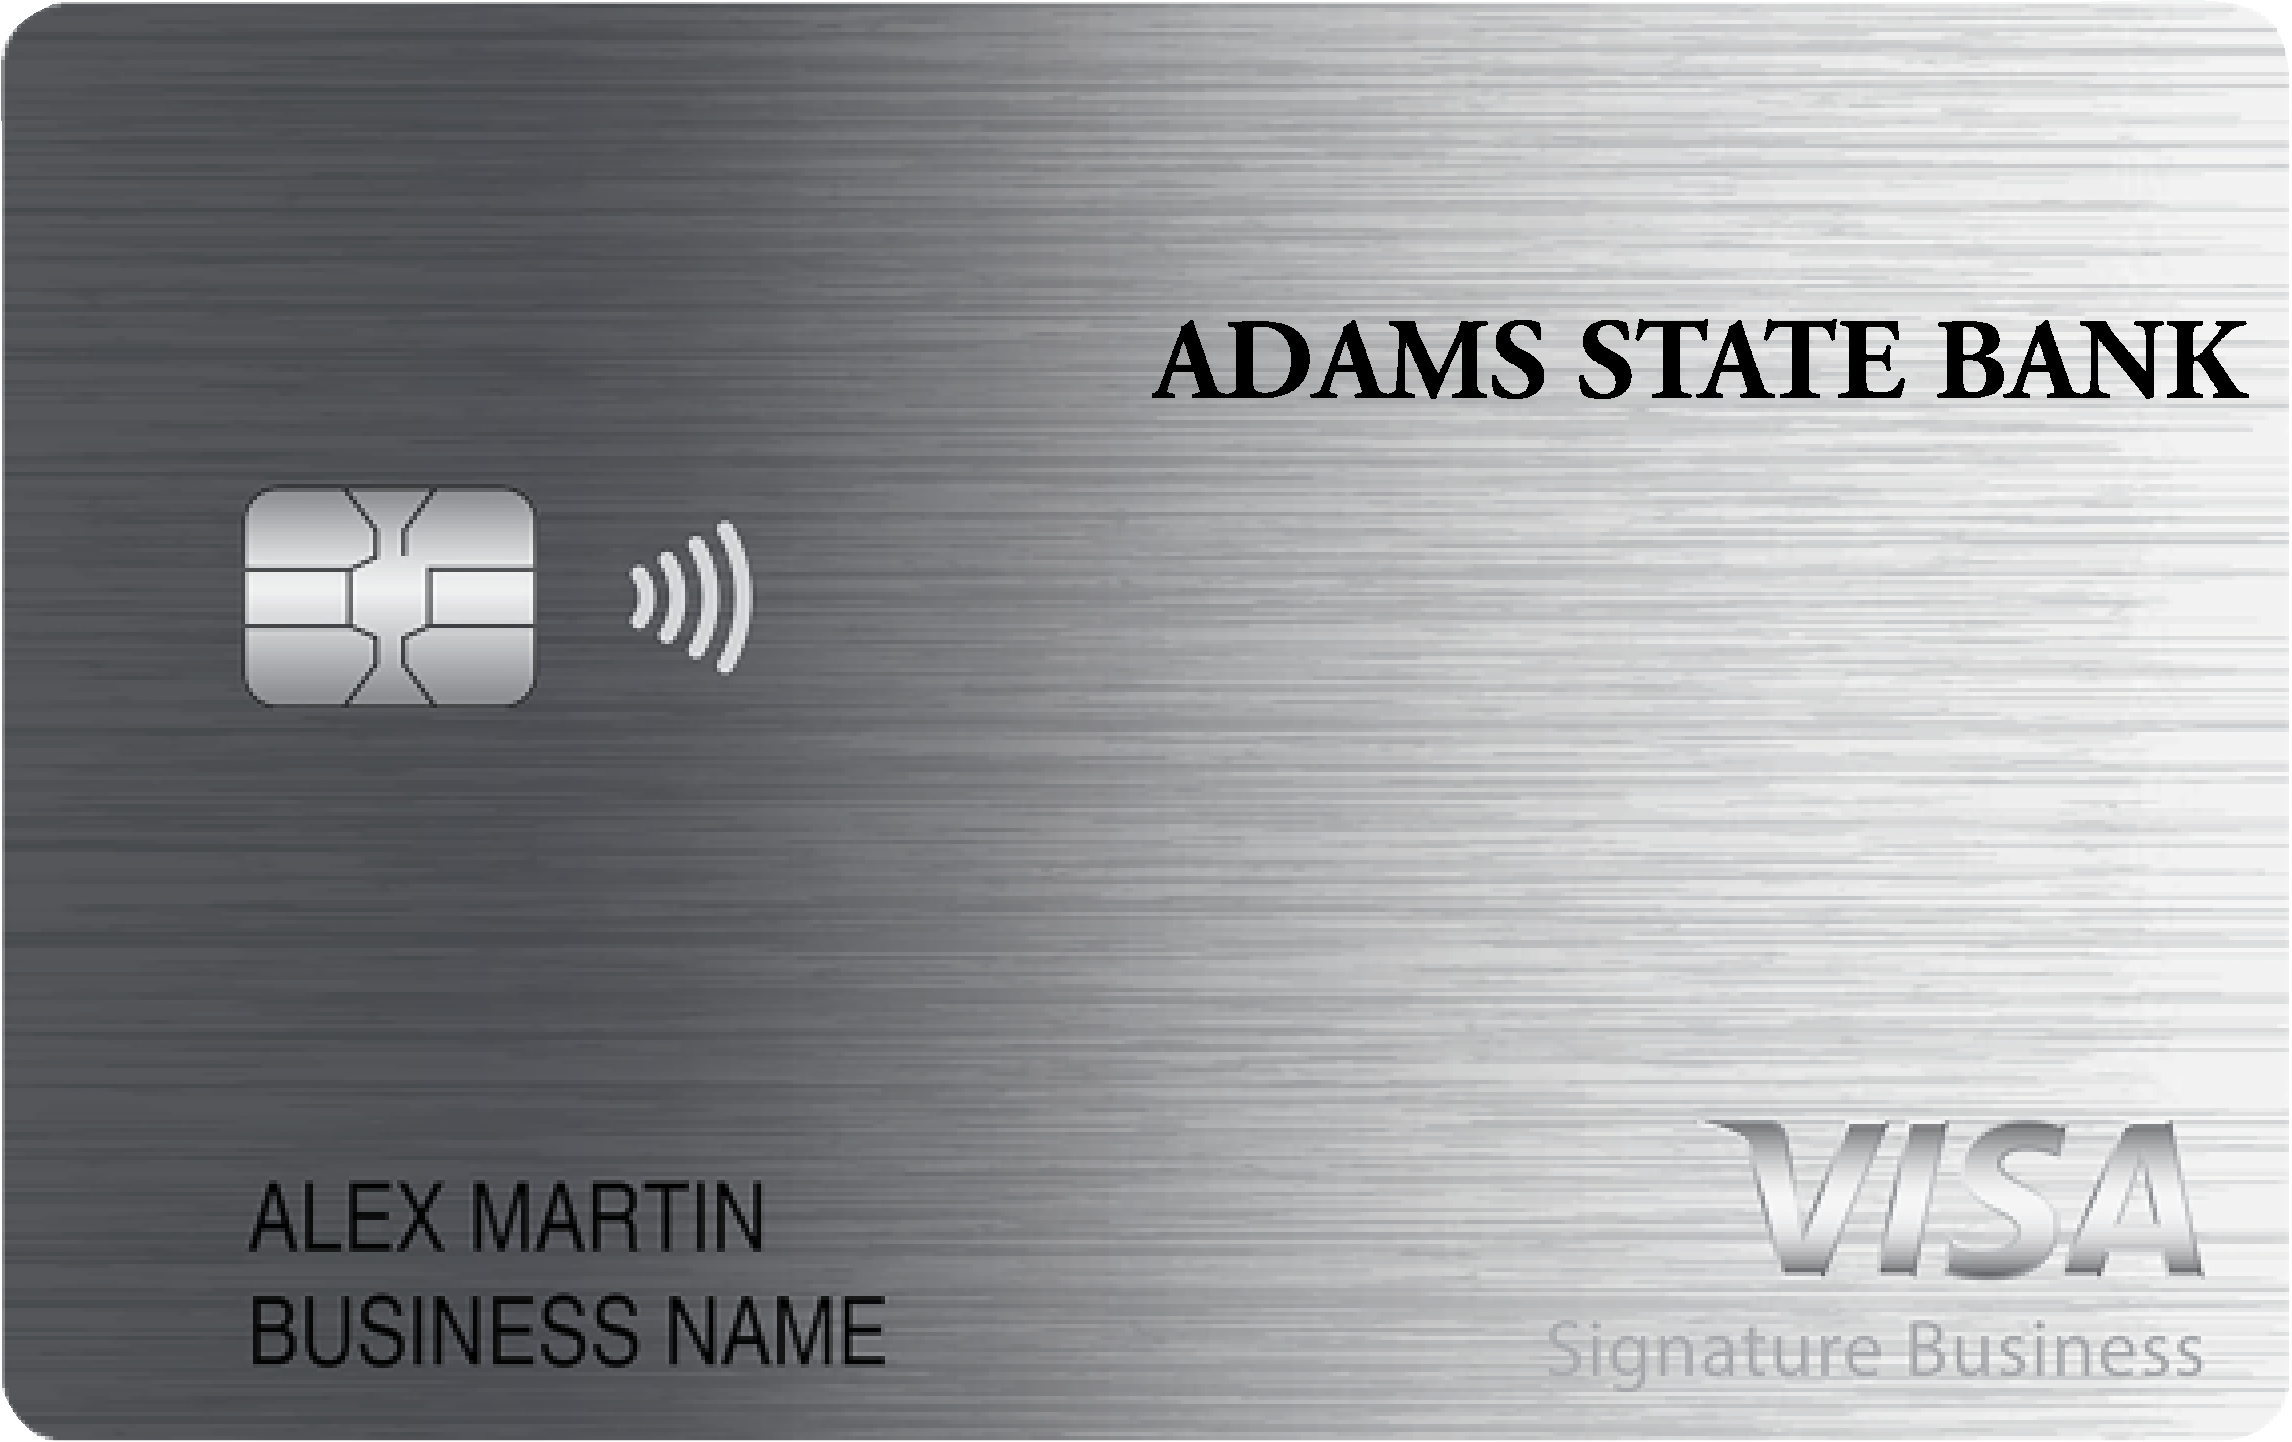 Adams State Bank Smart Business Rewards Card